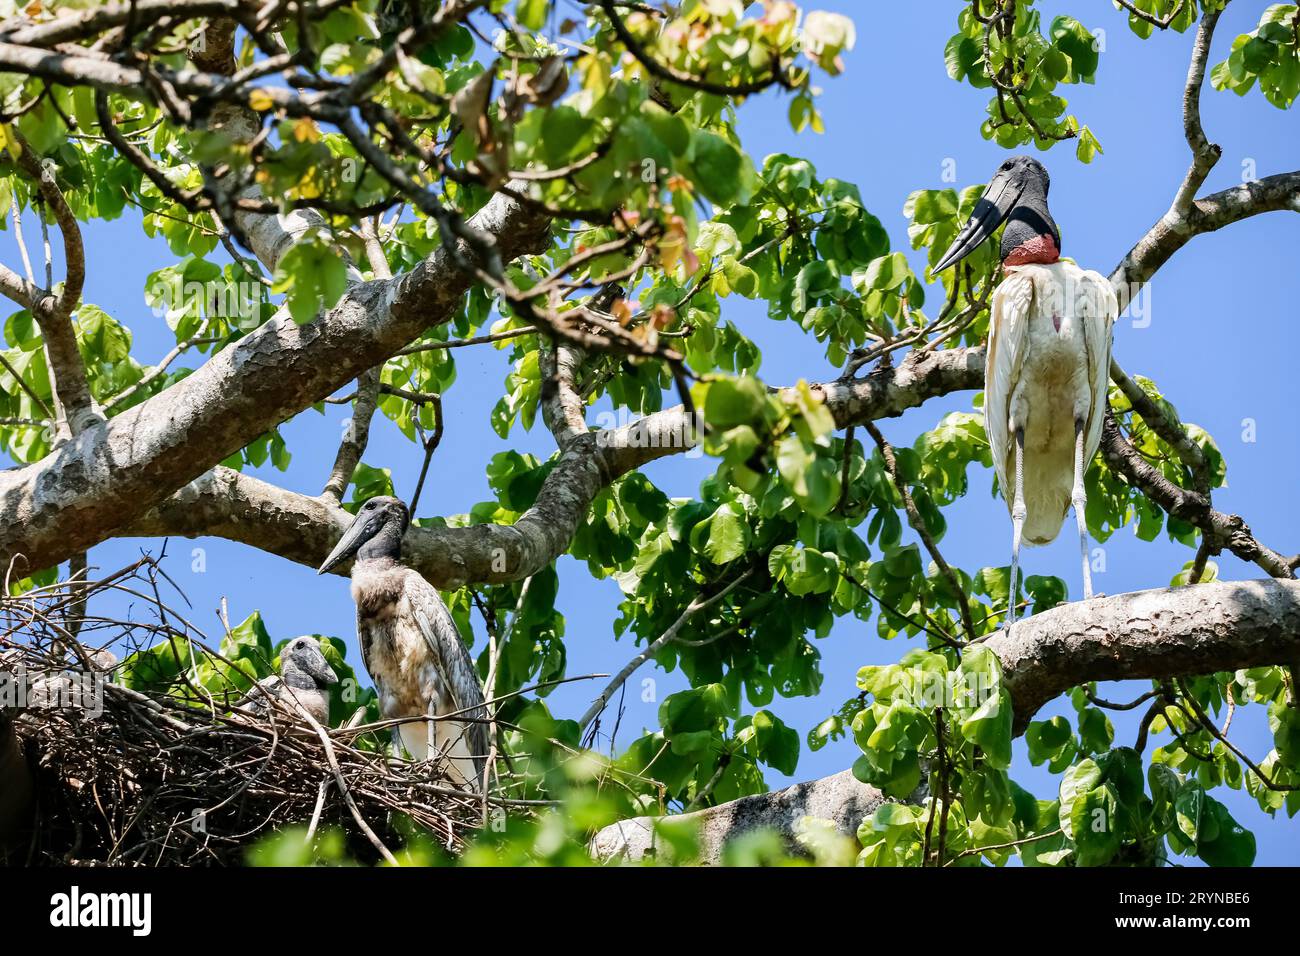 Jabiru Stork beobachtet seinen Jungen im Nest eines Baumes, Pantanal Wetlands, Mato Grosso, Brasilien Stockfoto